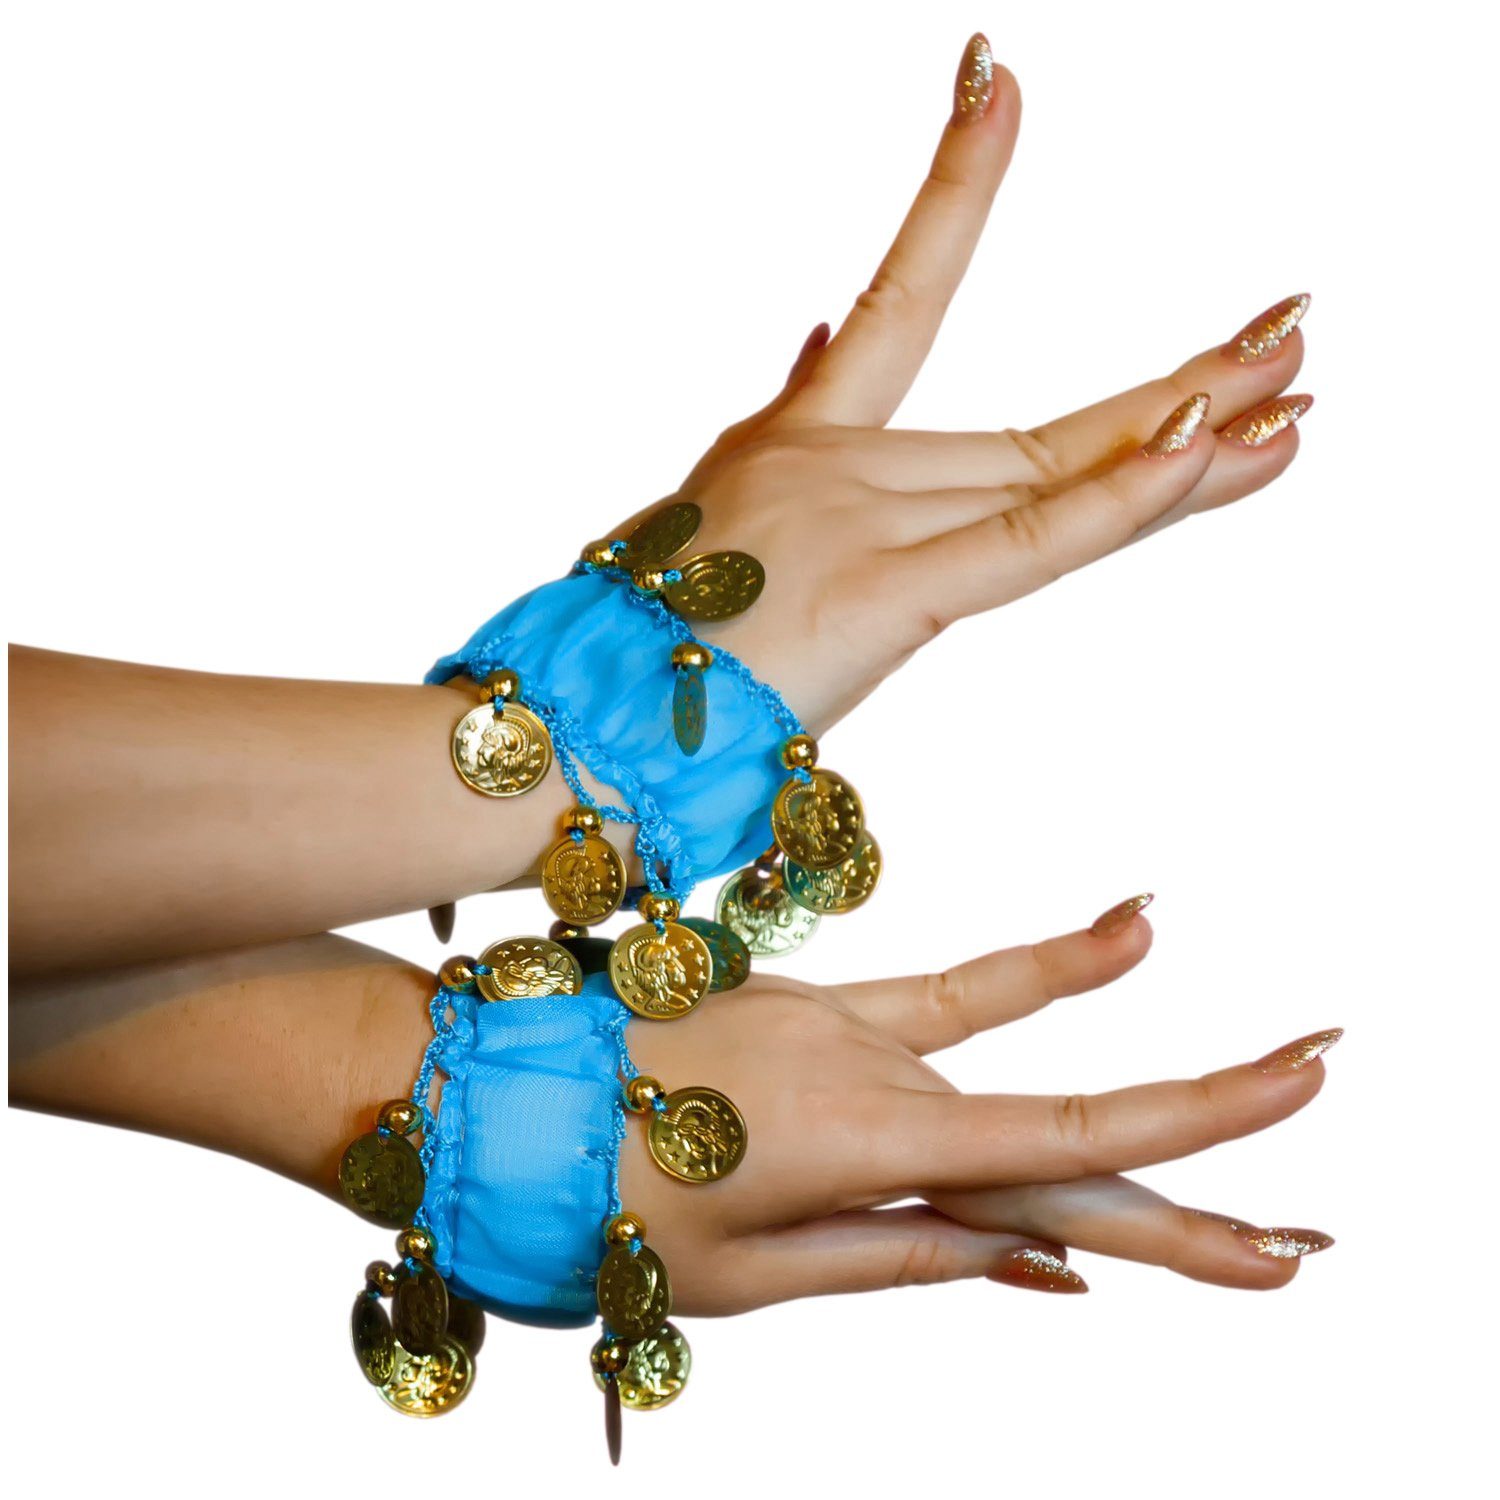 MyBeautyworld24 Armband Belly Dance Handkette Armbänder Fasching hellblau (Paar)